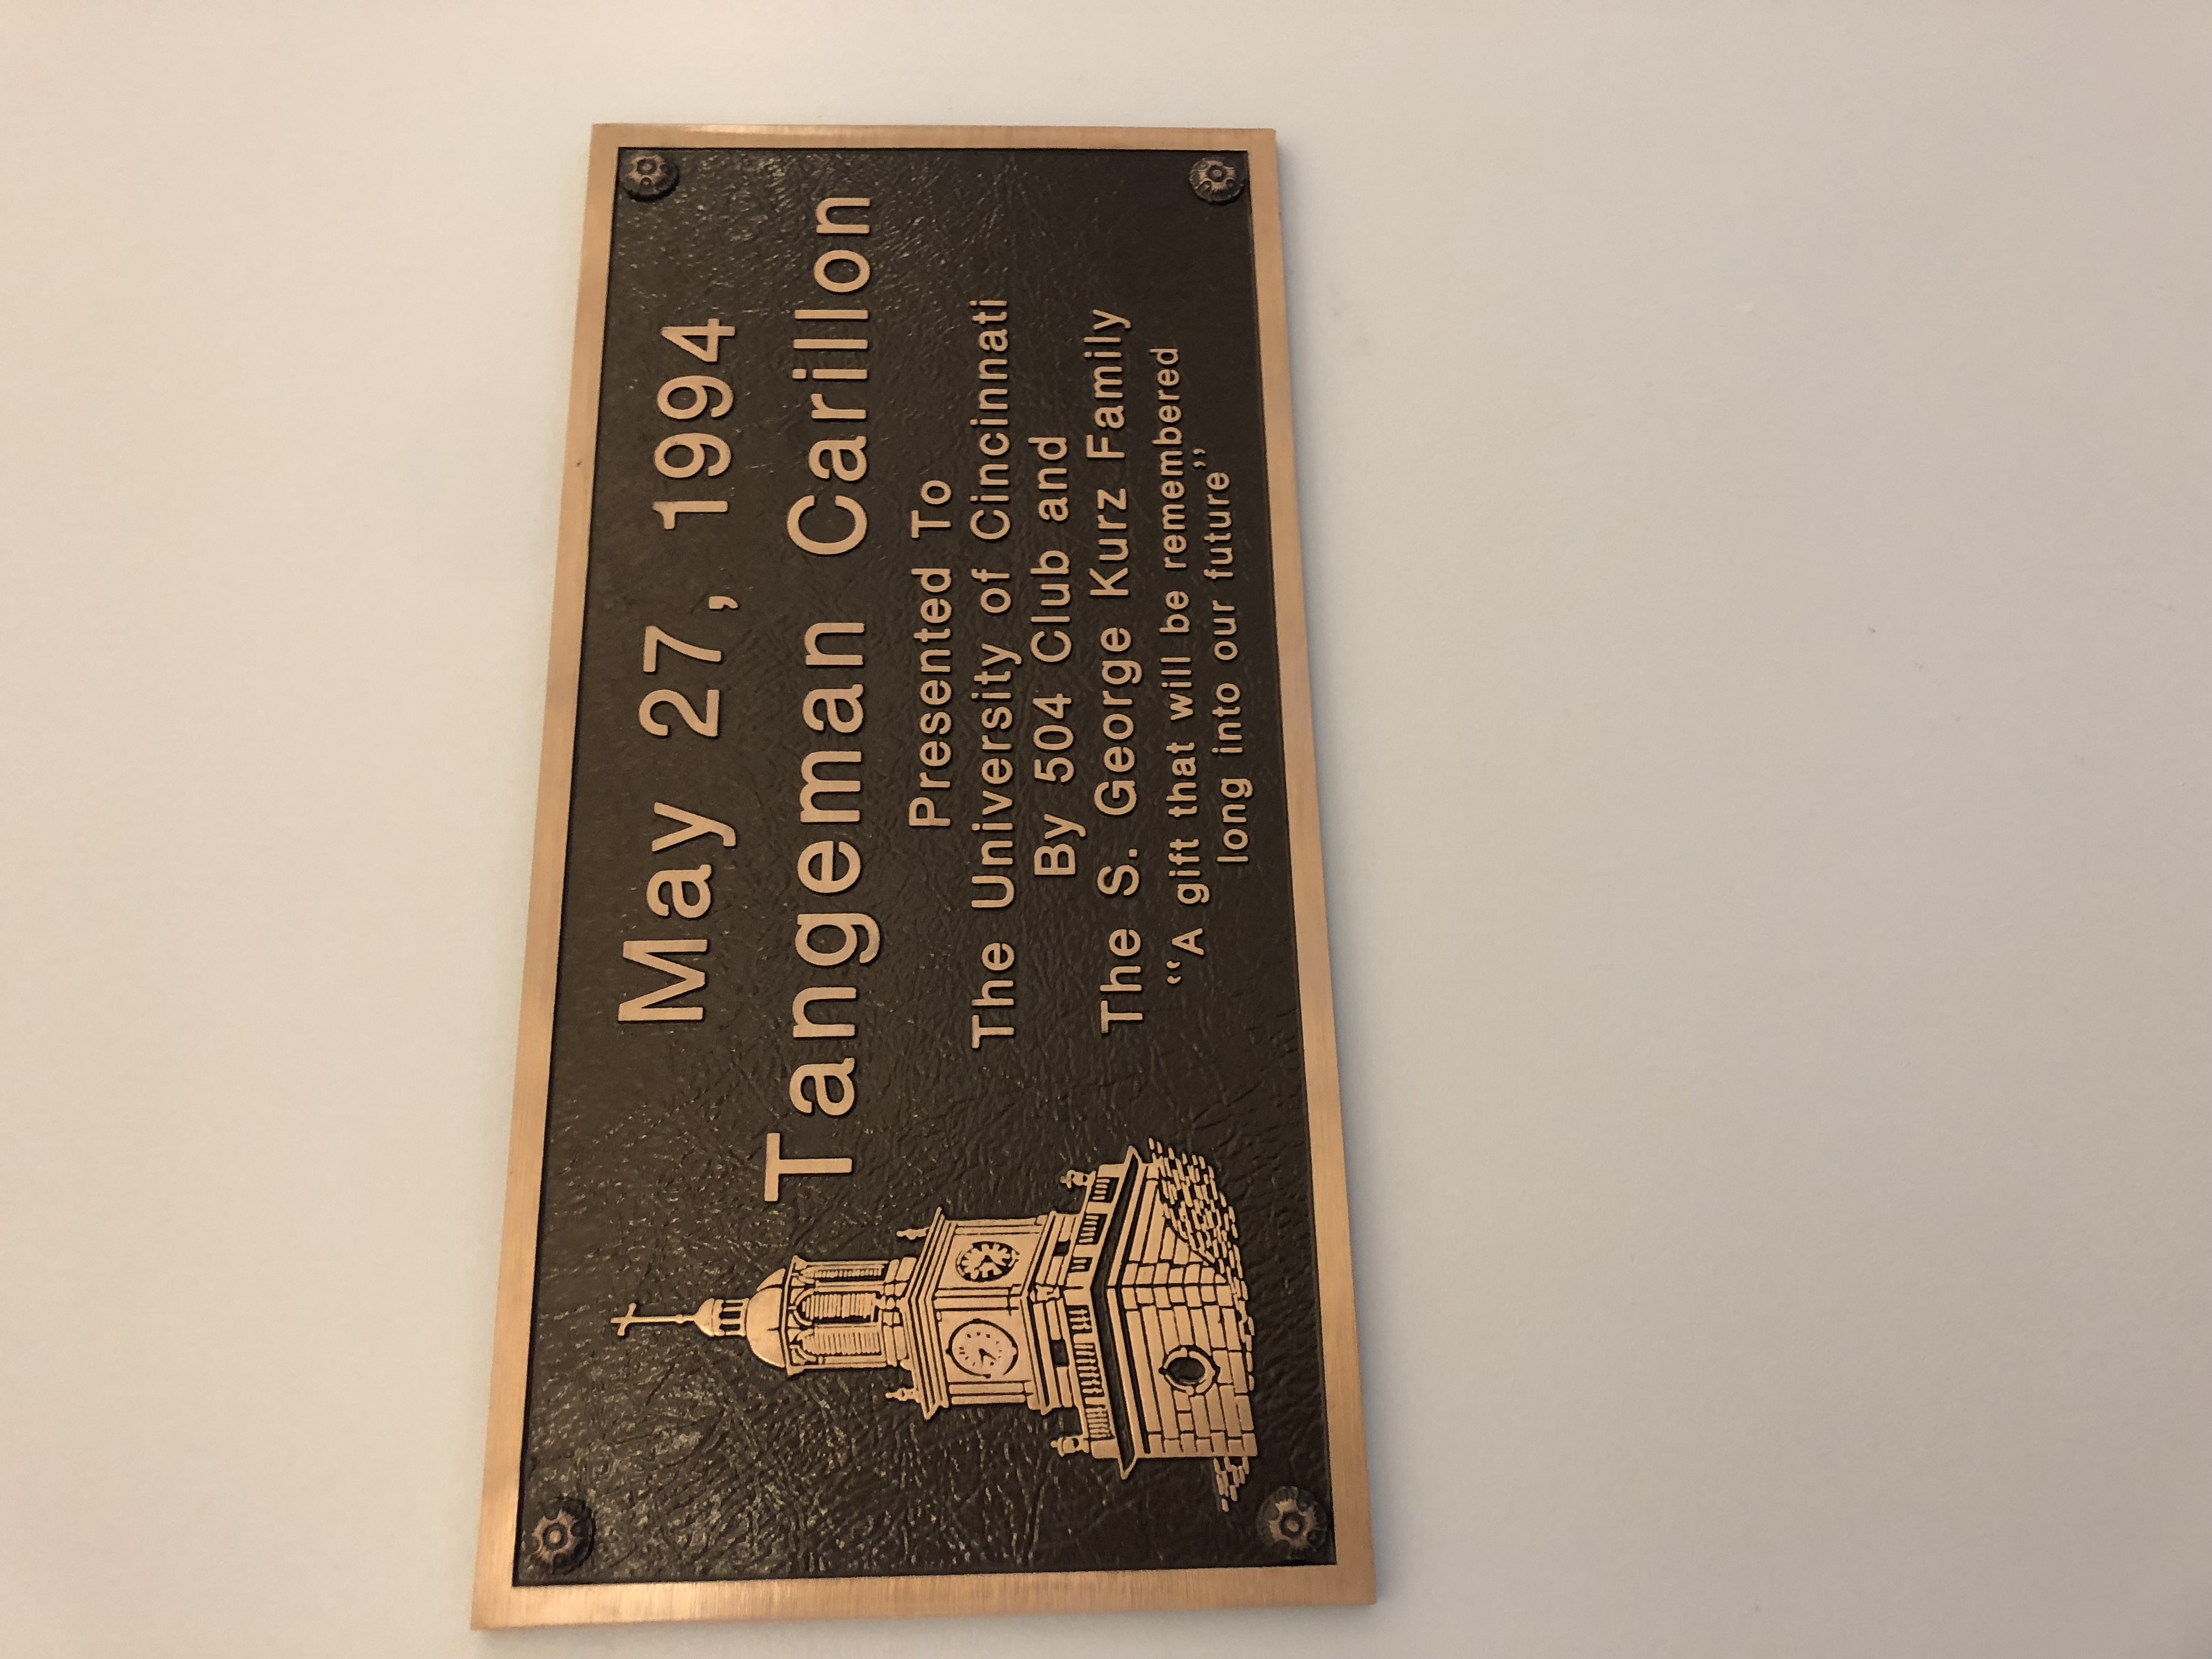 plaque about a clock tower at tangeman center